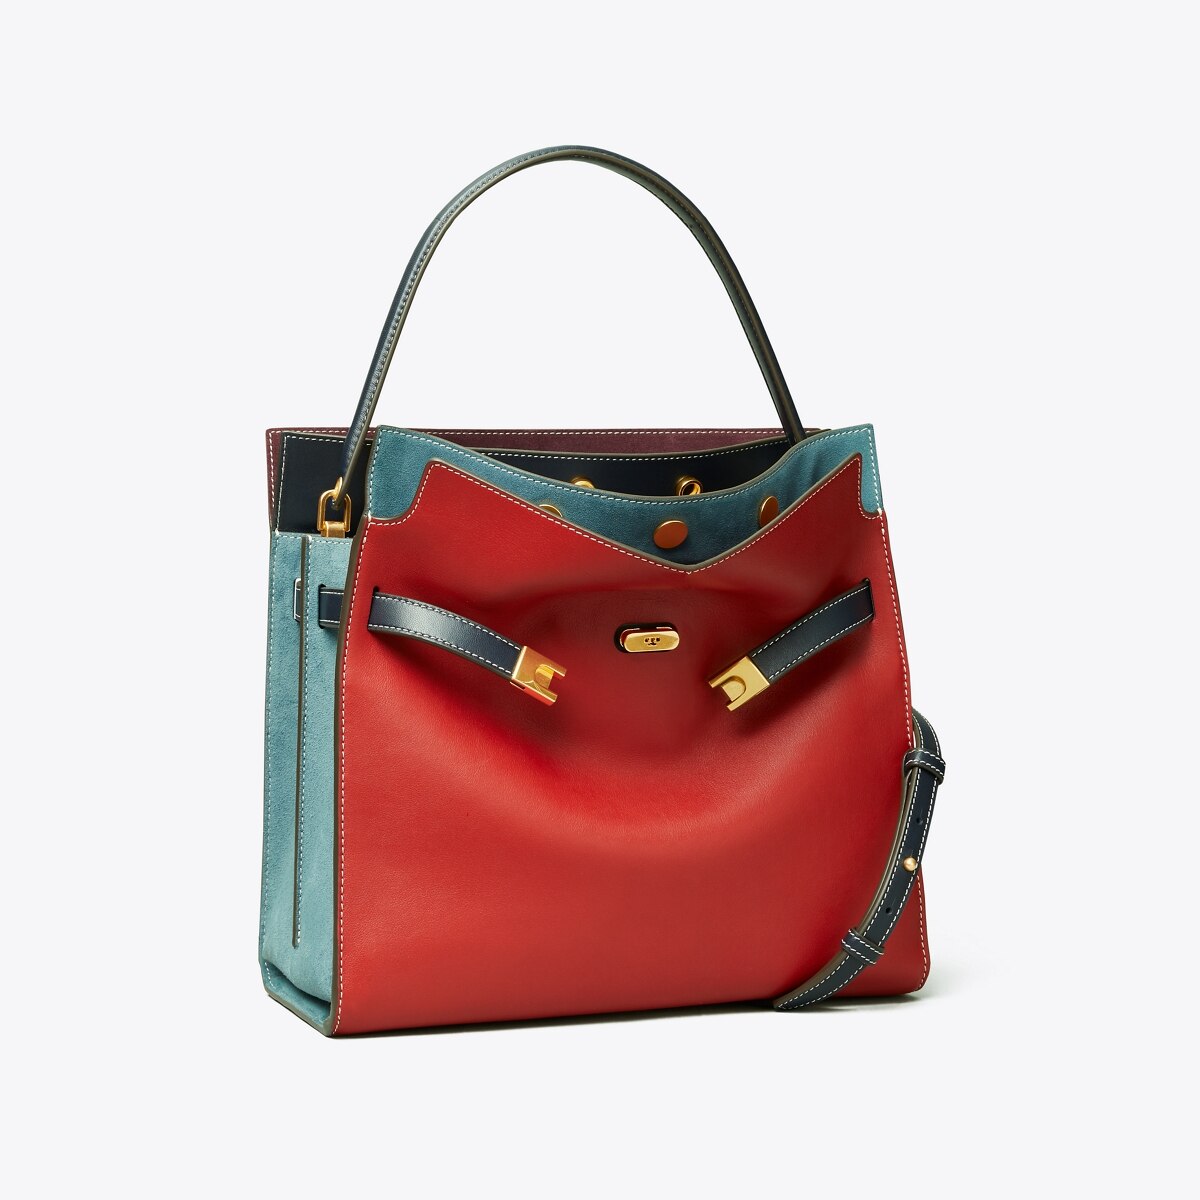 Tory Burch Lee Radziwill Mini Handbags For Sale | IQS Executive